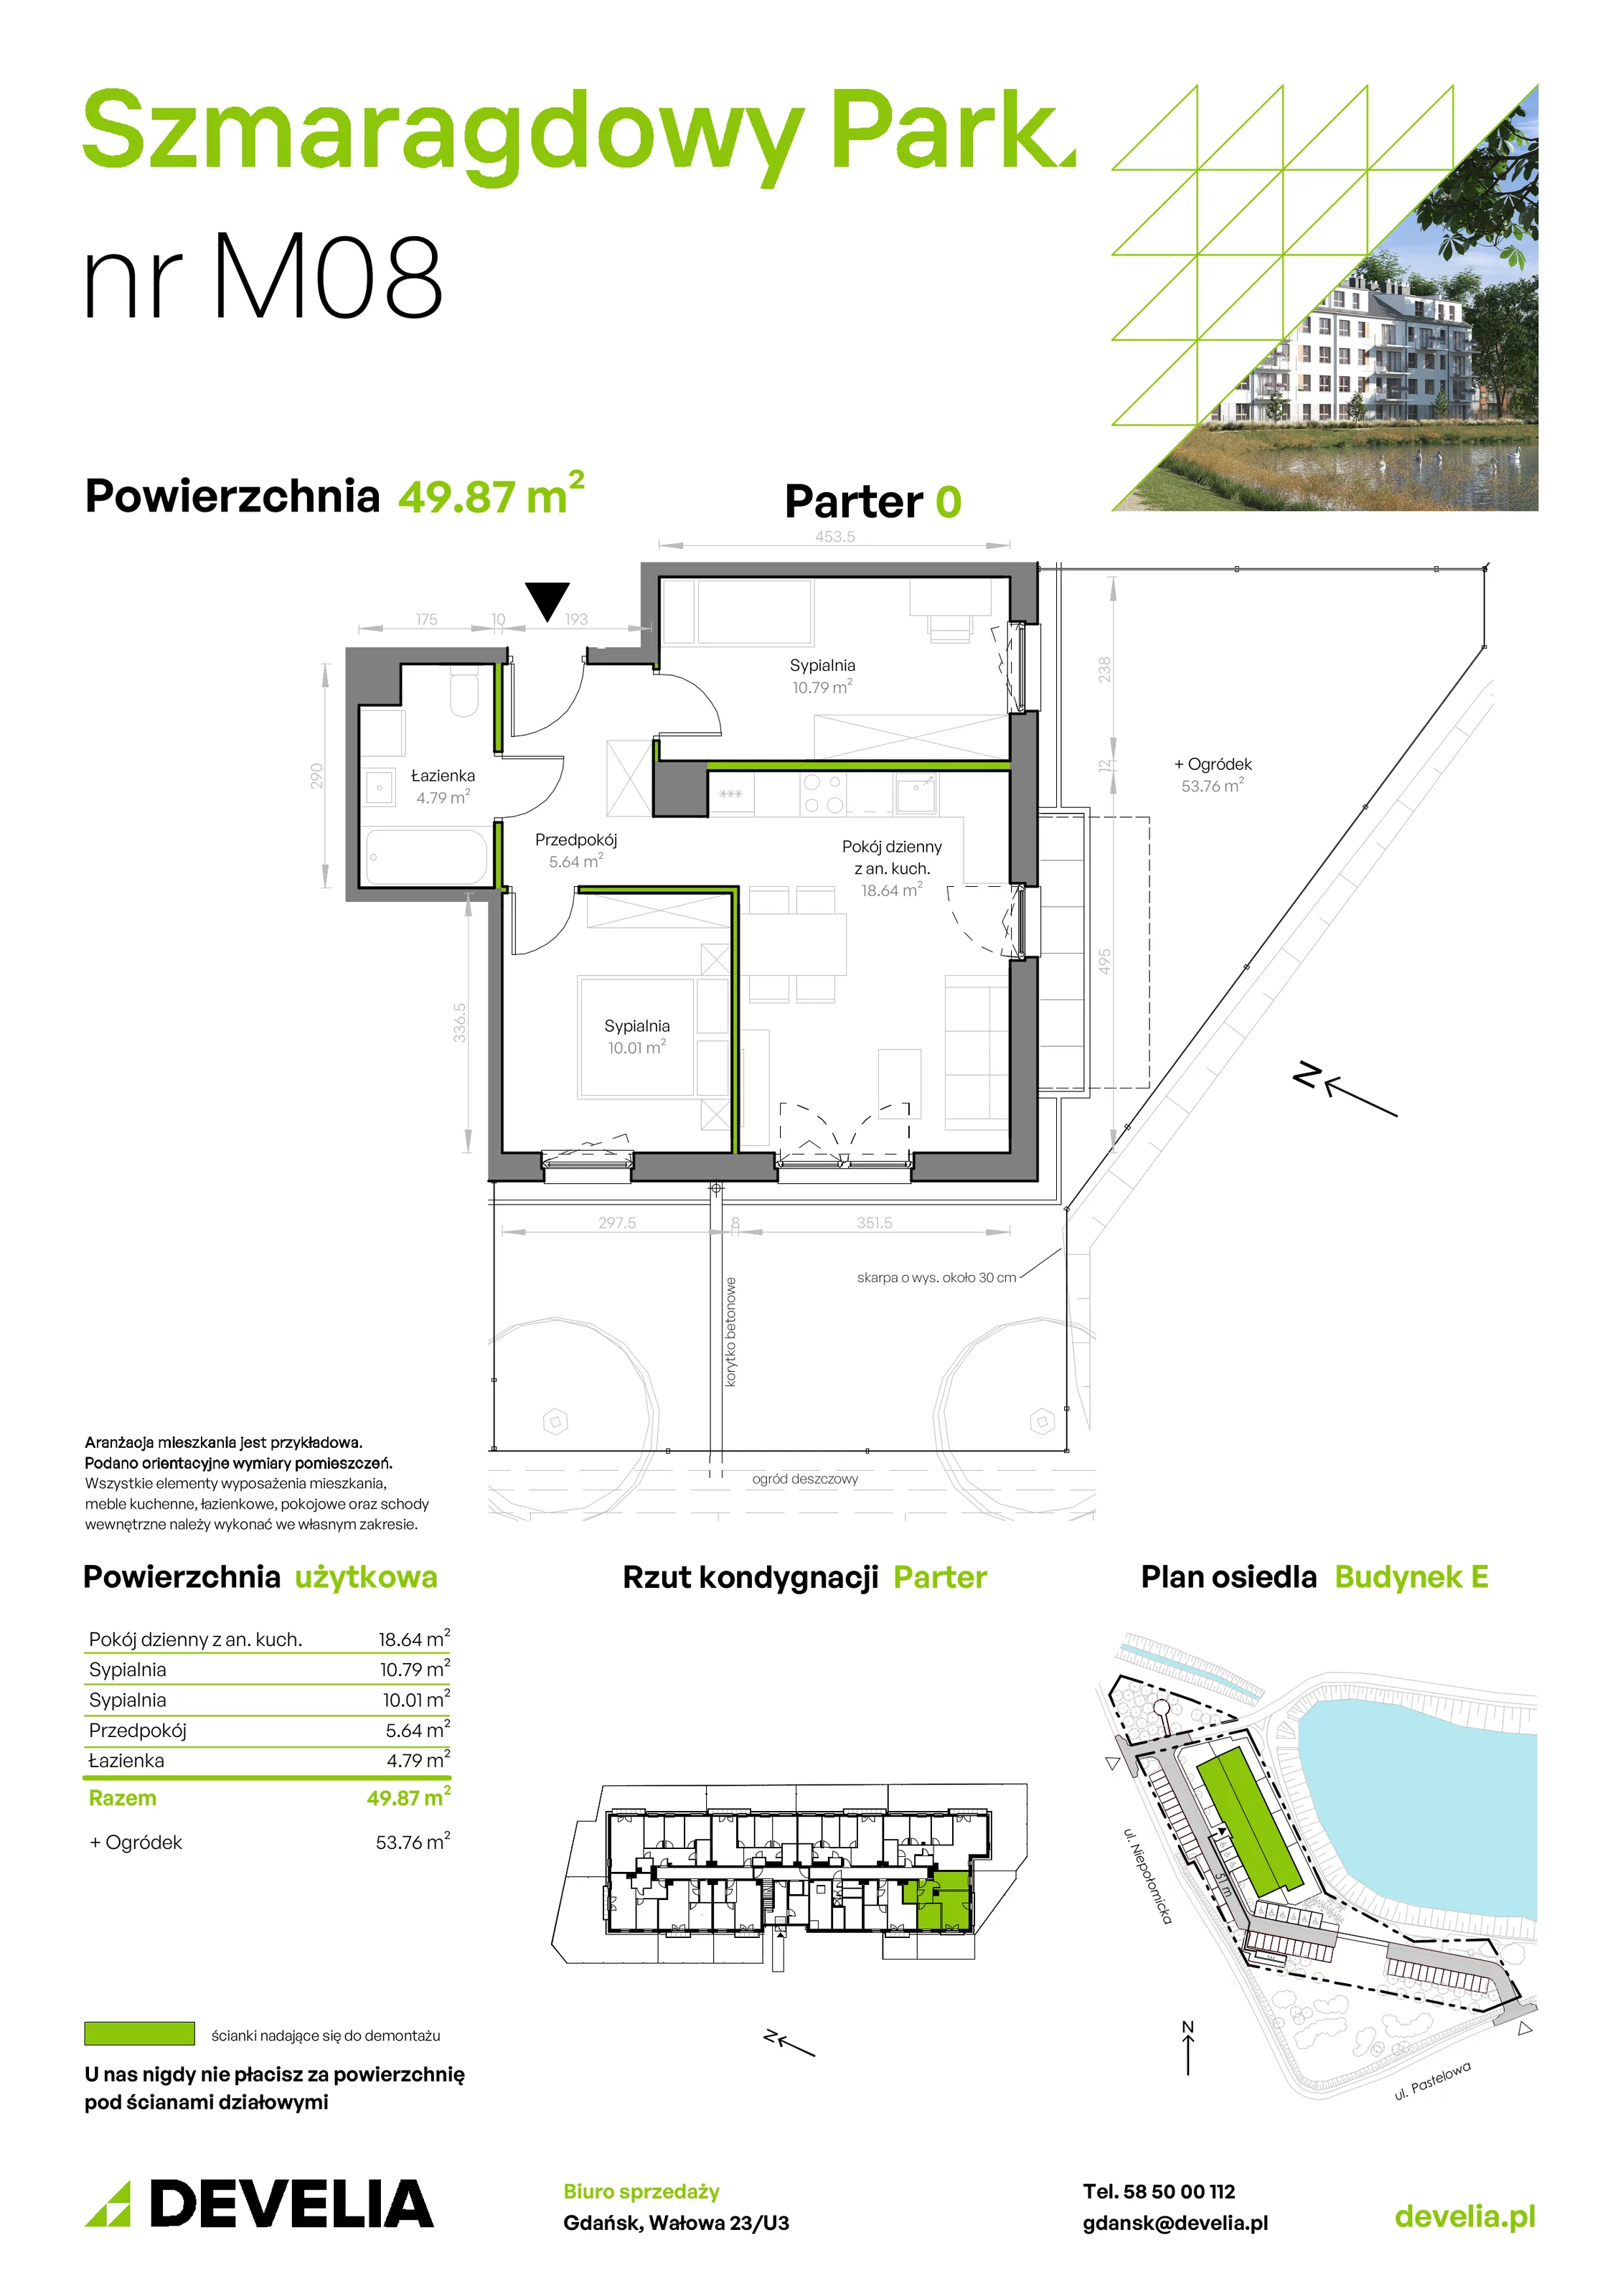 Mieszkanie 49,87 m², parter, oferta nr E/008, Szmaragdowy Park, Gdańsk, Orunia Górna-Gdańsk Południe, Łostowice, ul. Topazowa 2